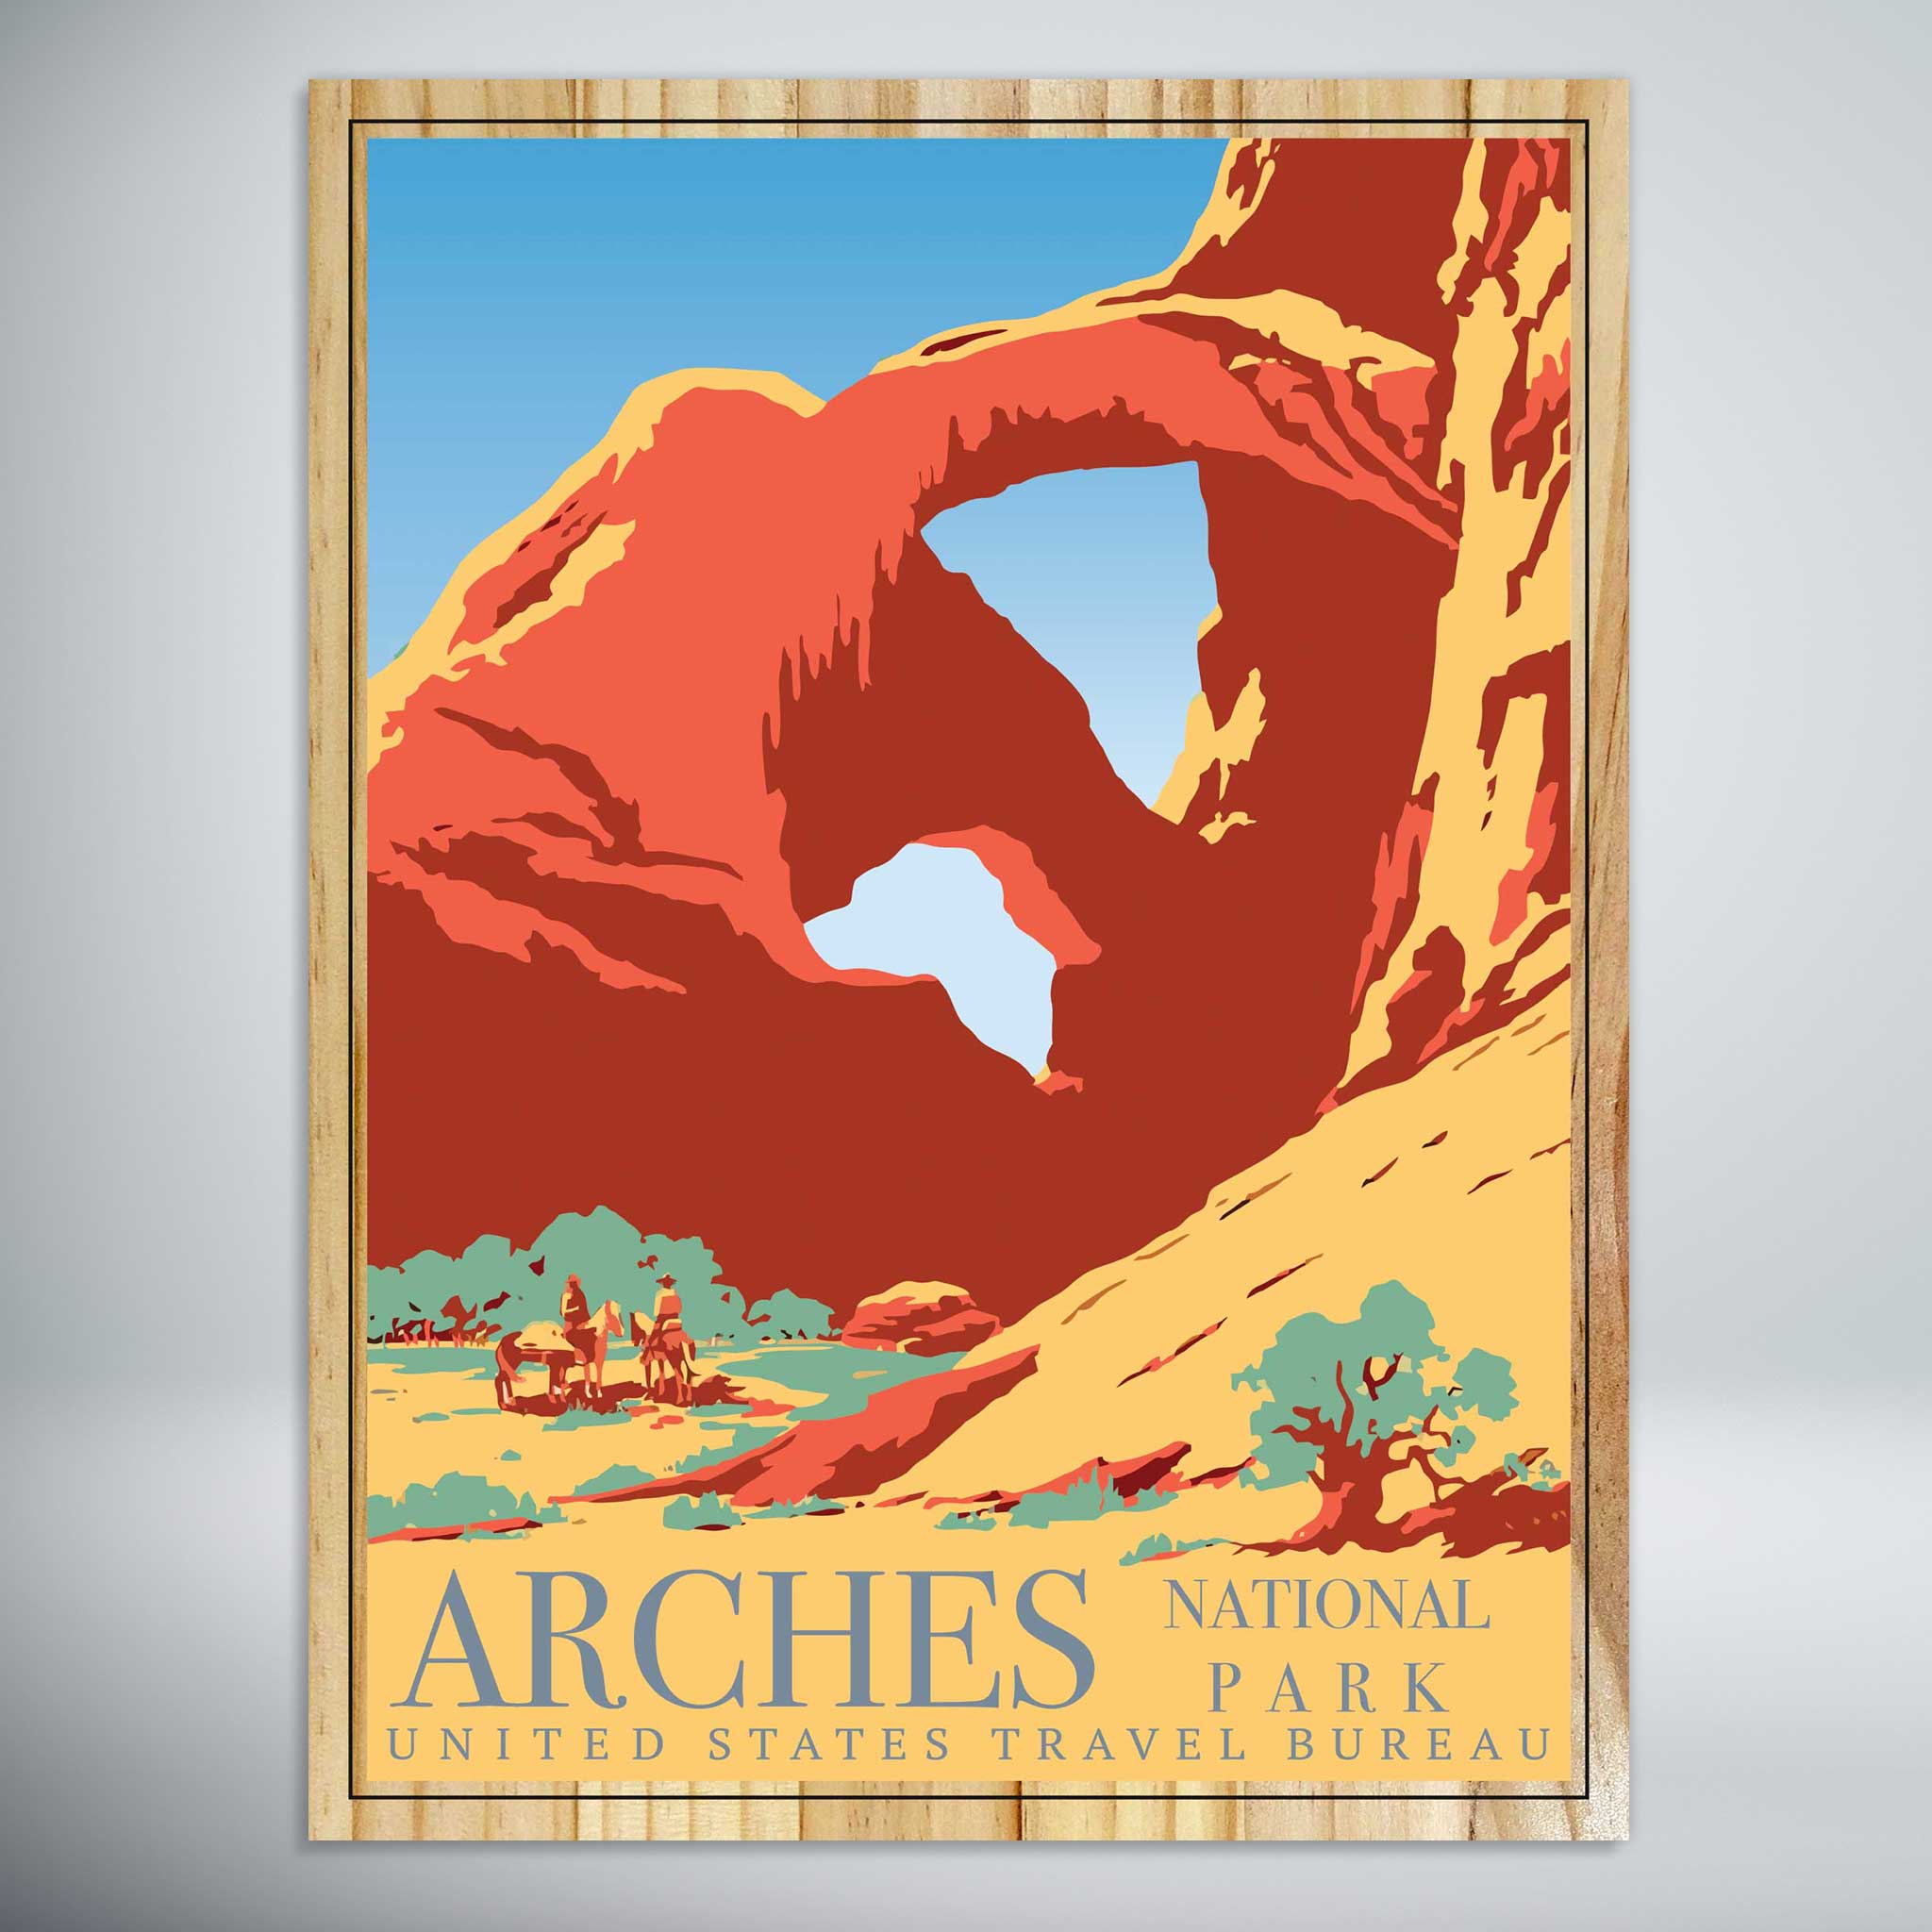 Arches National Park Vintage Travel Poster